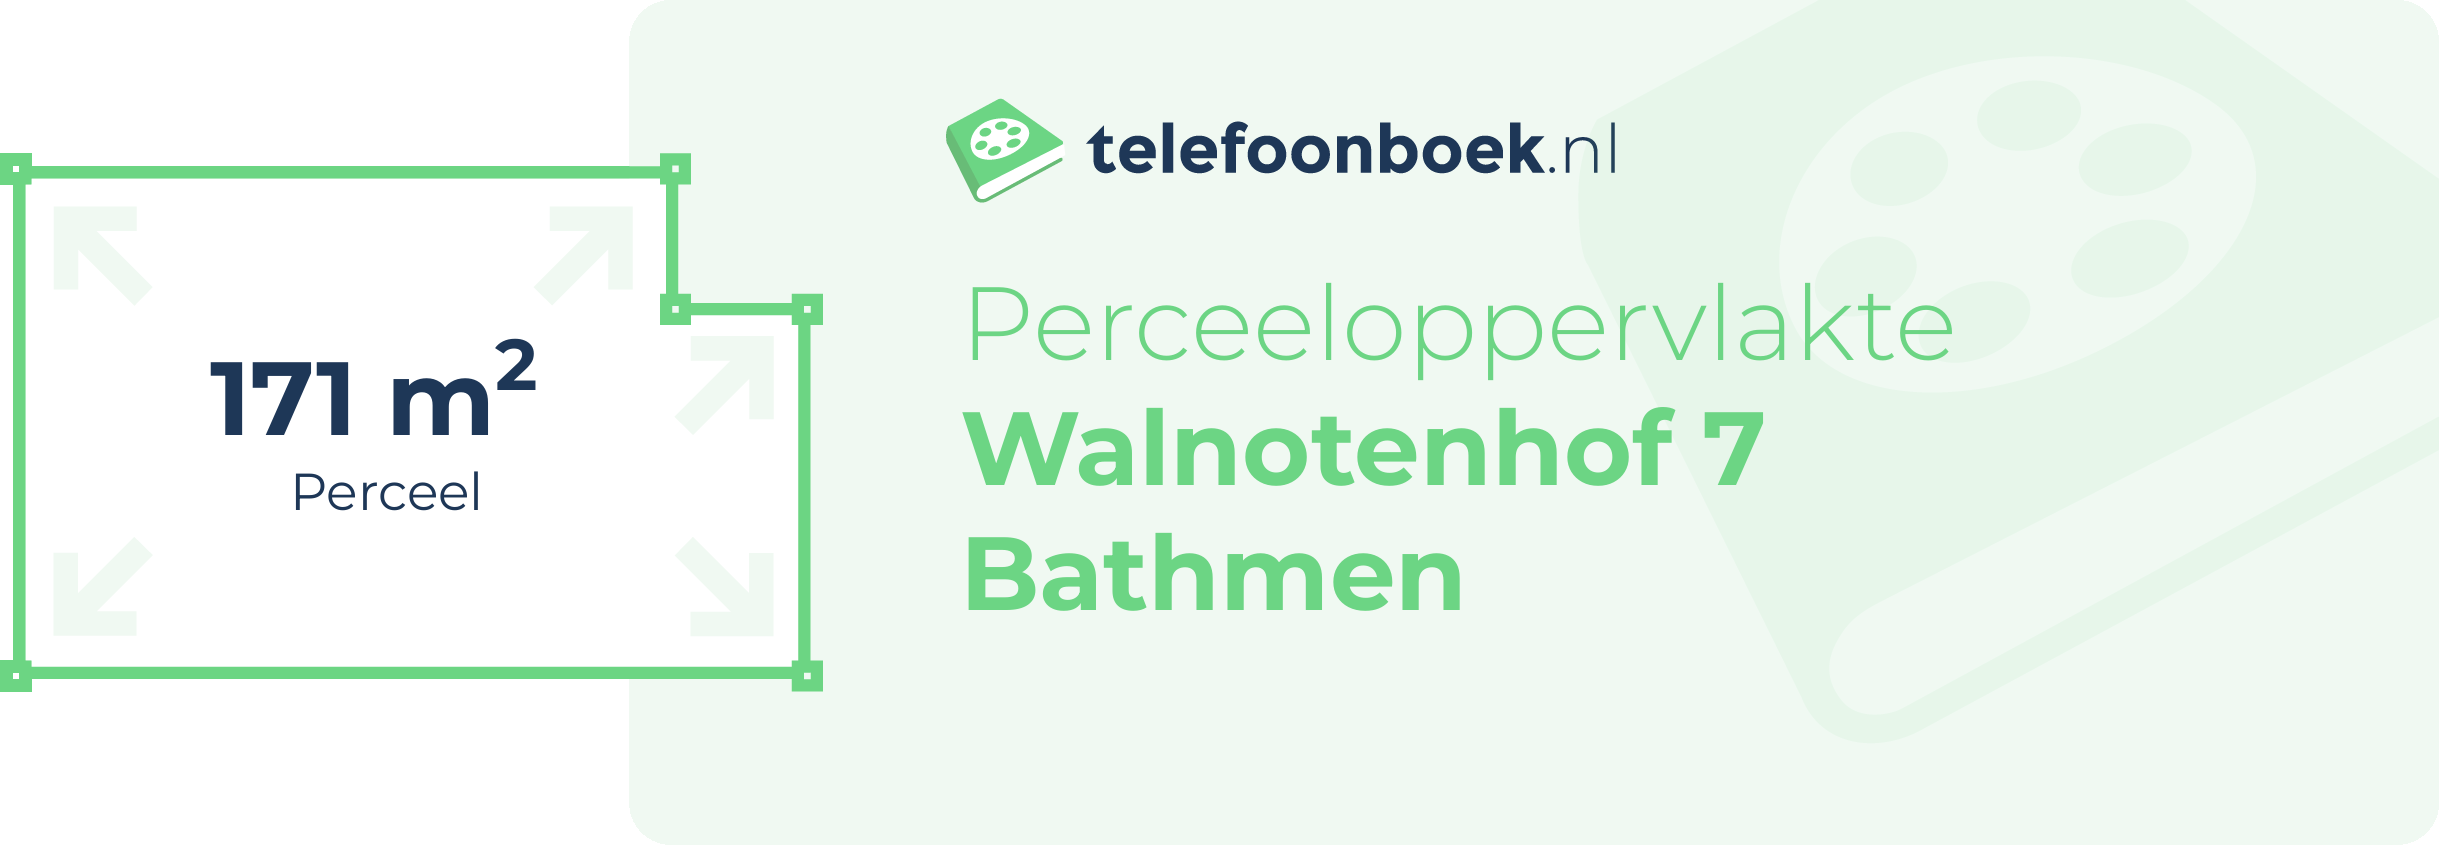 Perceeloppervlakte Walnotenhof 7 Bathmen